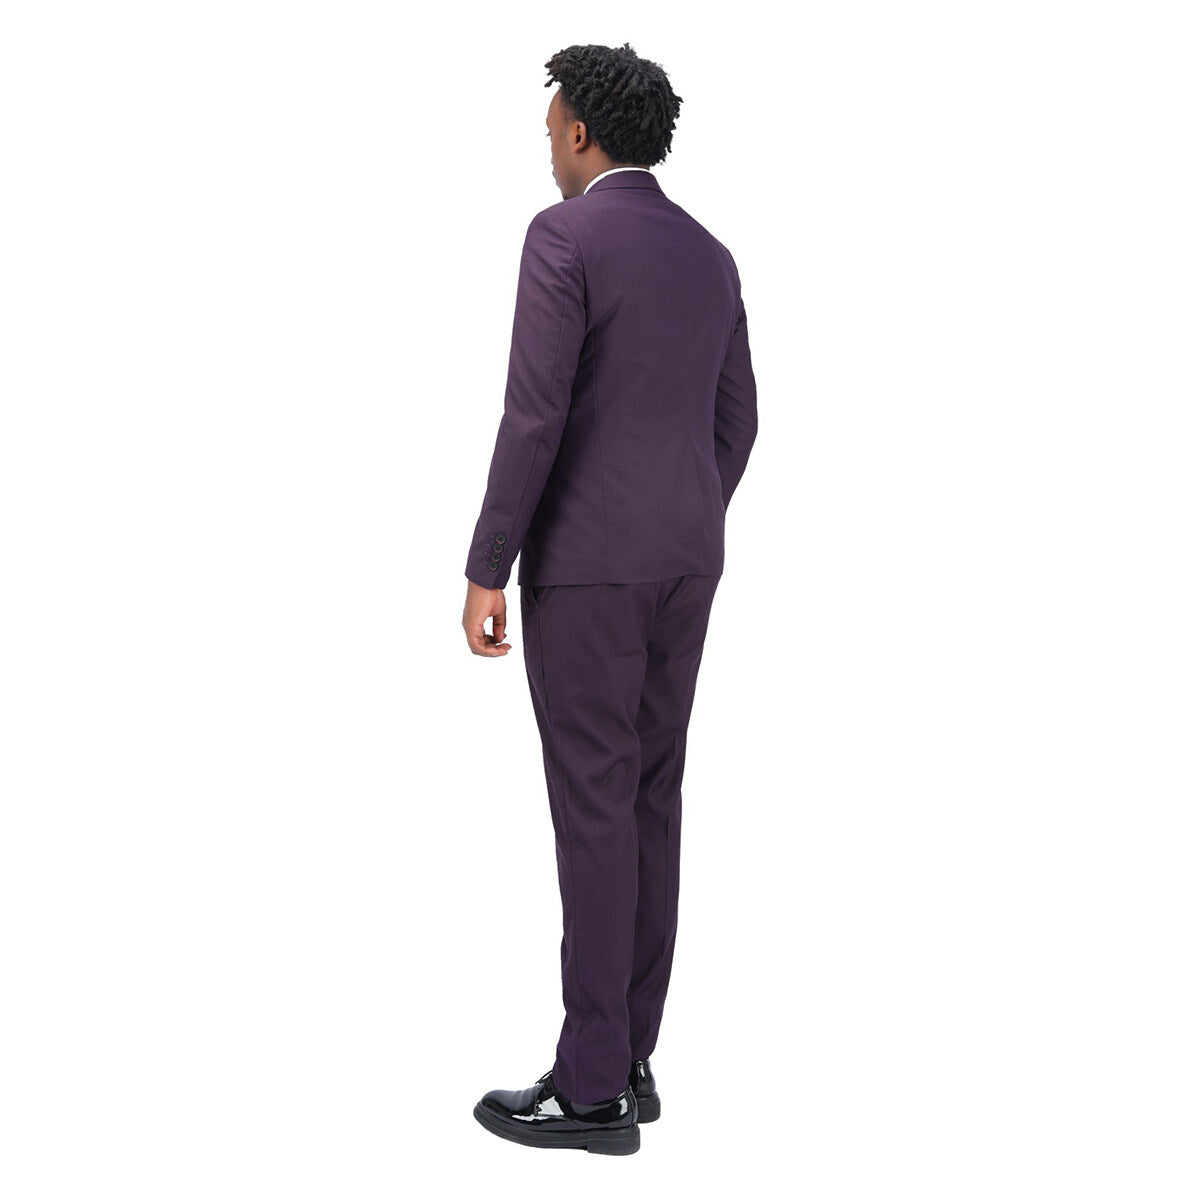 3-Piece Slim Fit Solid Color Jacket Smart Wedding Formal Suit Purple